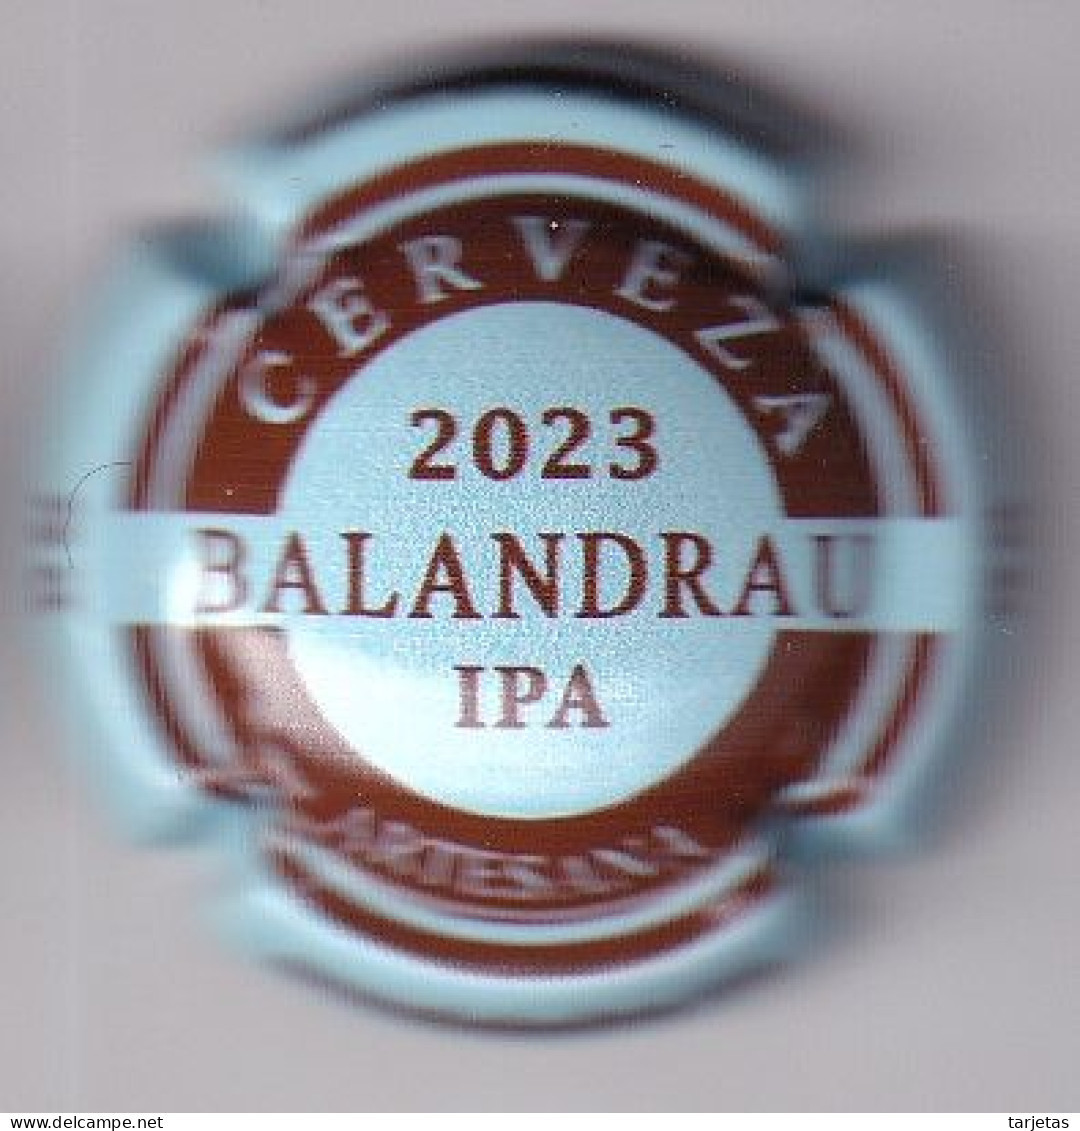 CHAPA DE CERVEZA ARTESANA BALANDRAU IPA 2023 (BEER-BIERE) CORONA - Beer